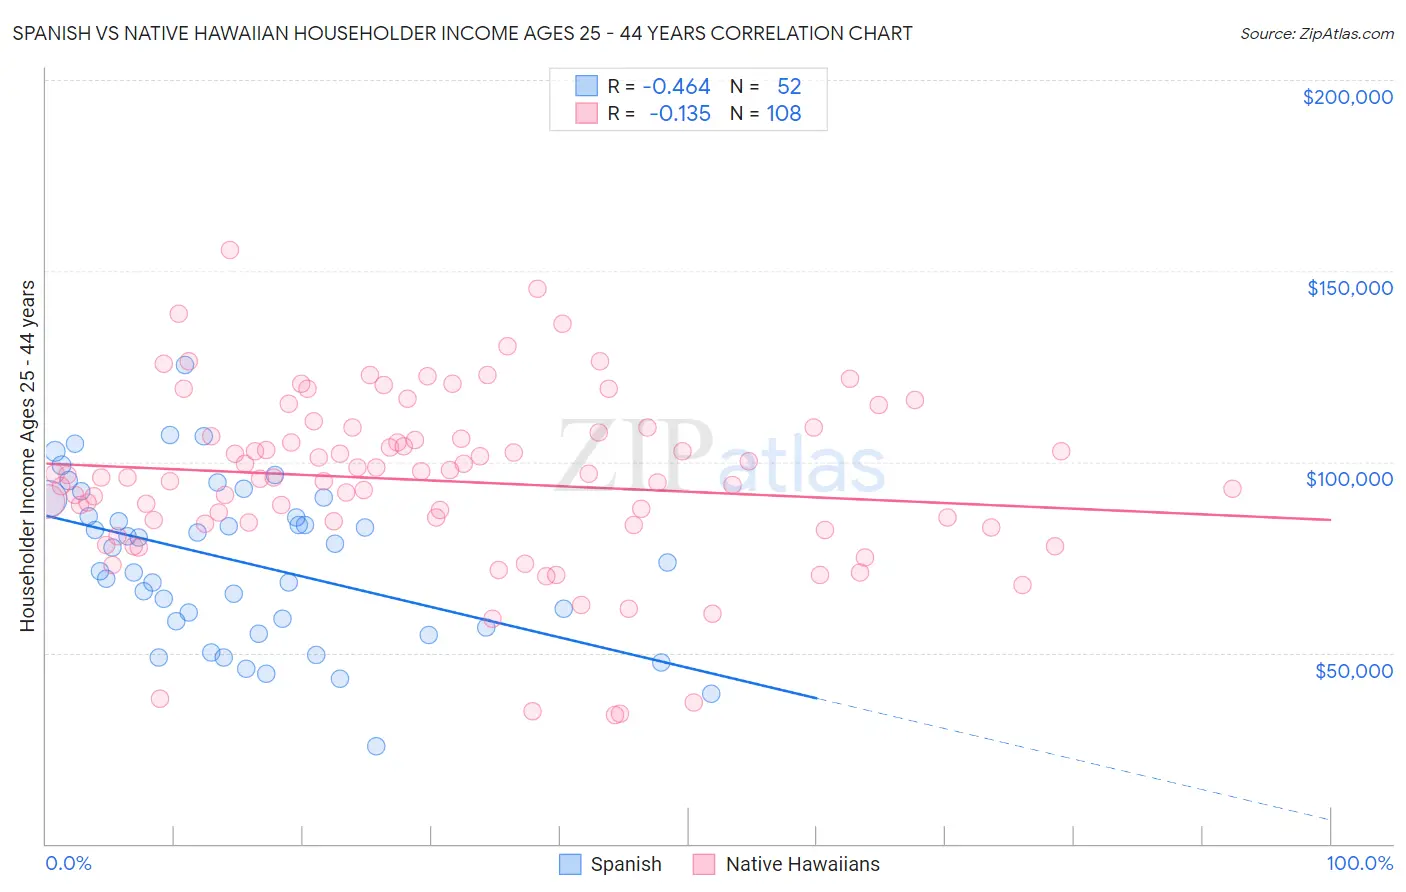 Spanish vs Native Hawaiian Householder Income Ages 25 - 44 years